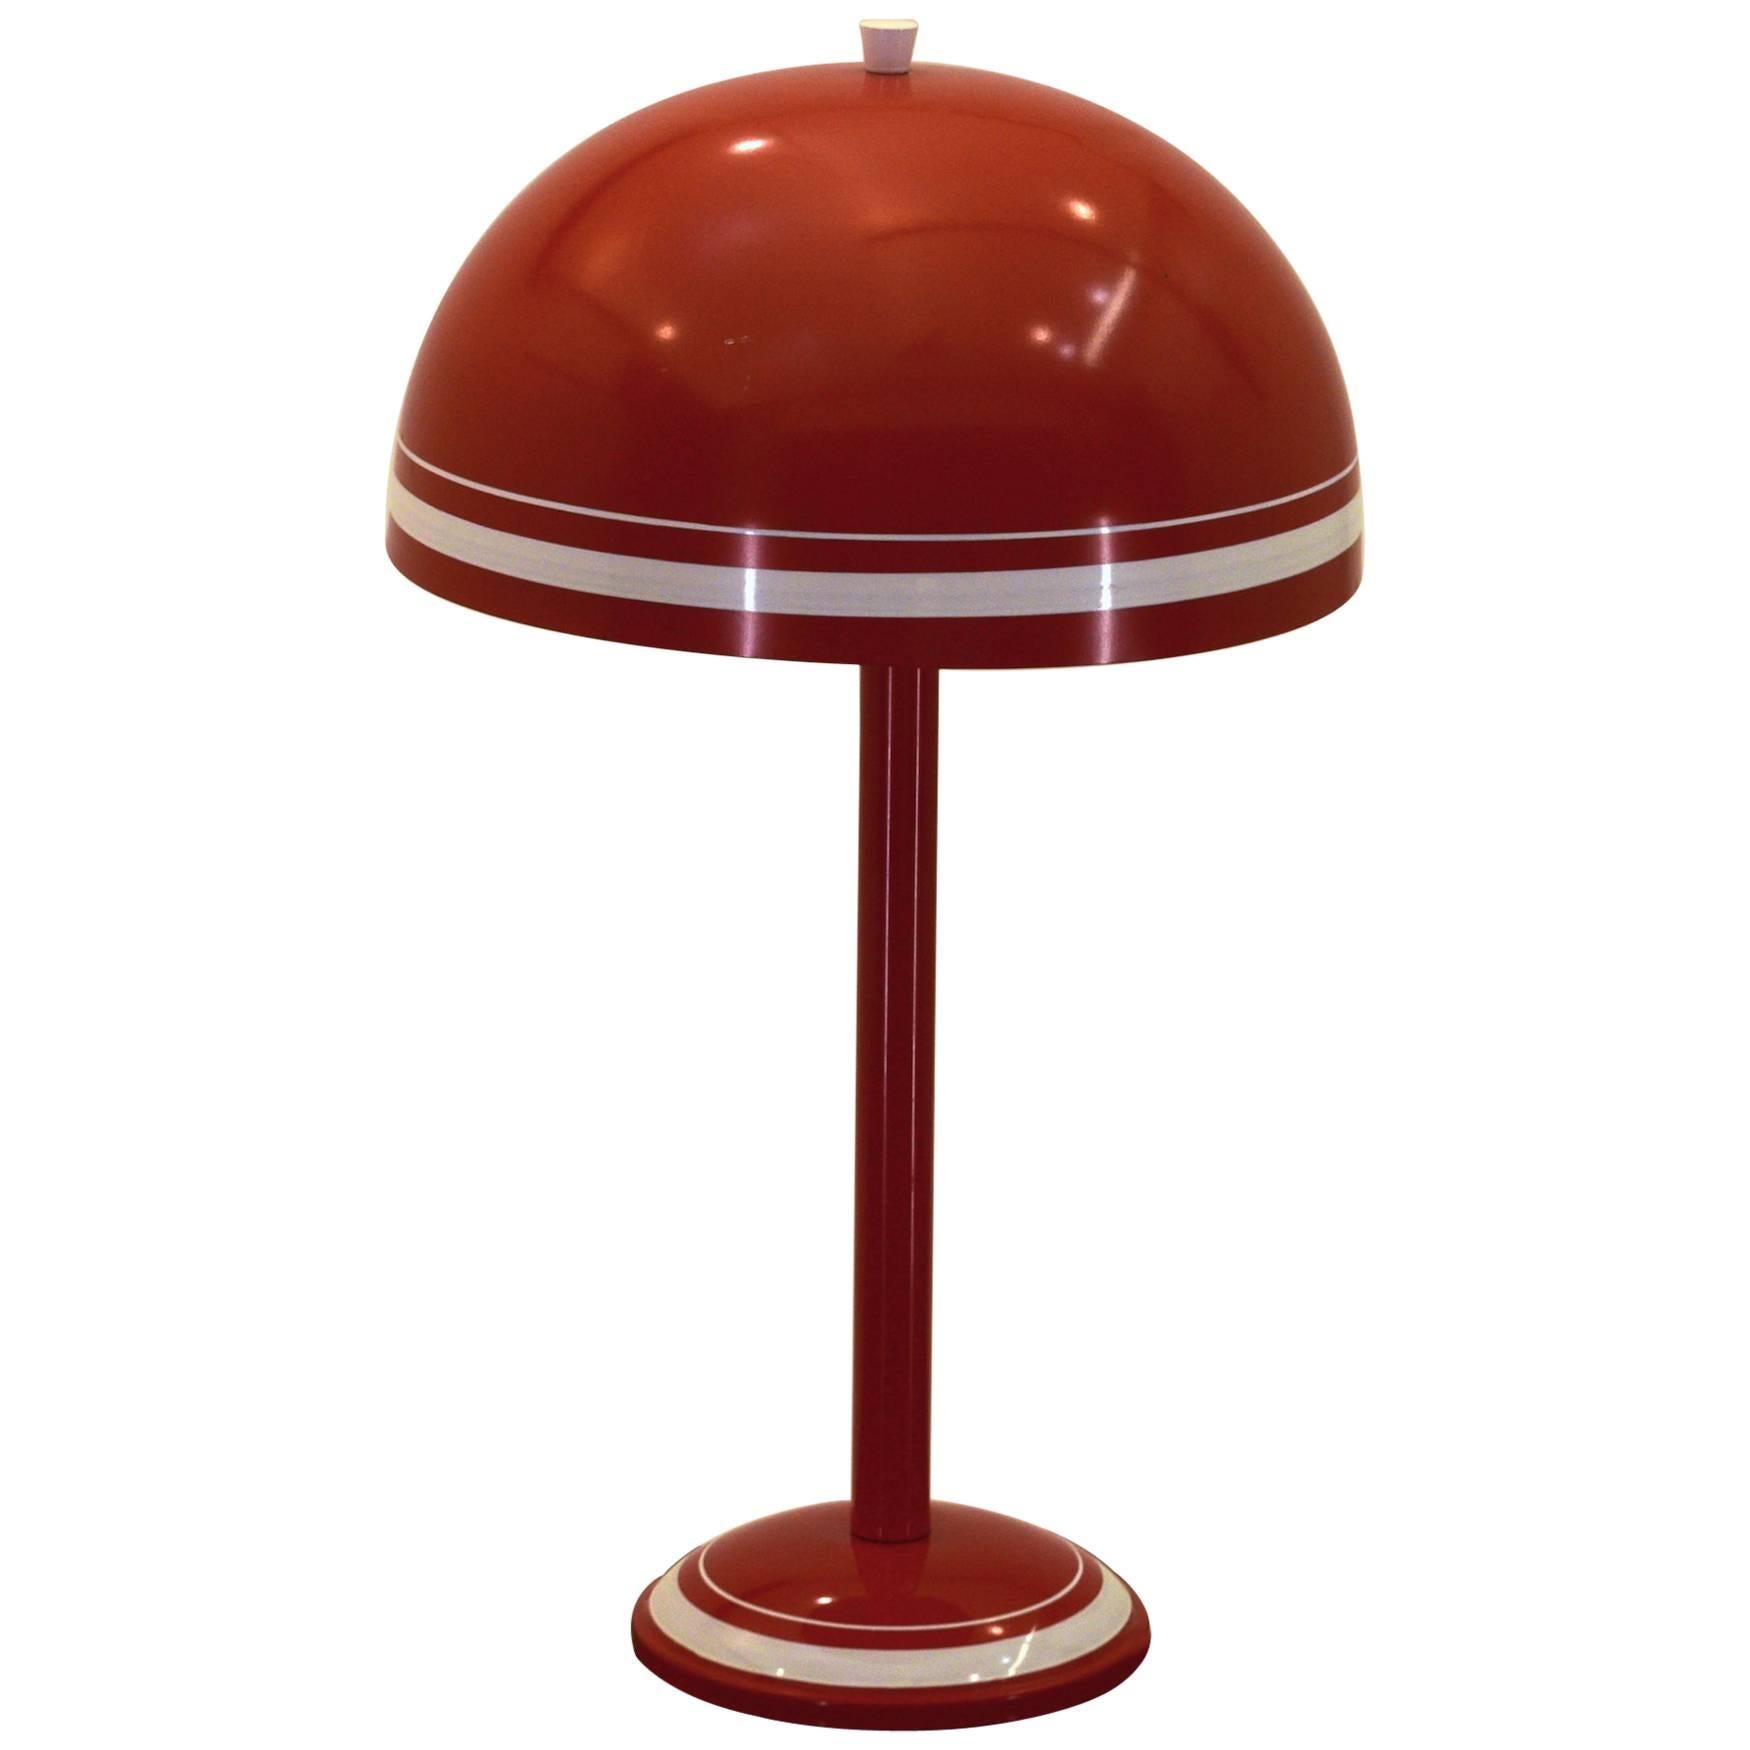 Steel Mushroom Table Lamp in Fire Engine Red